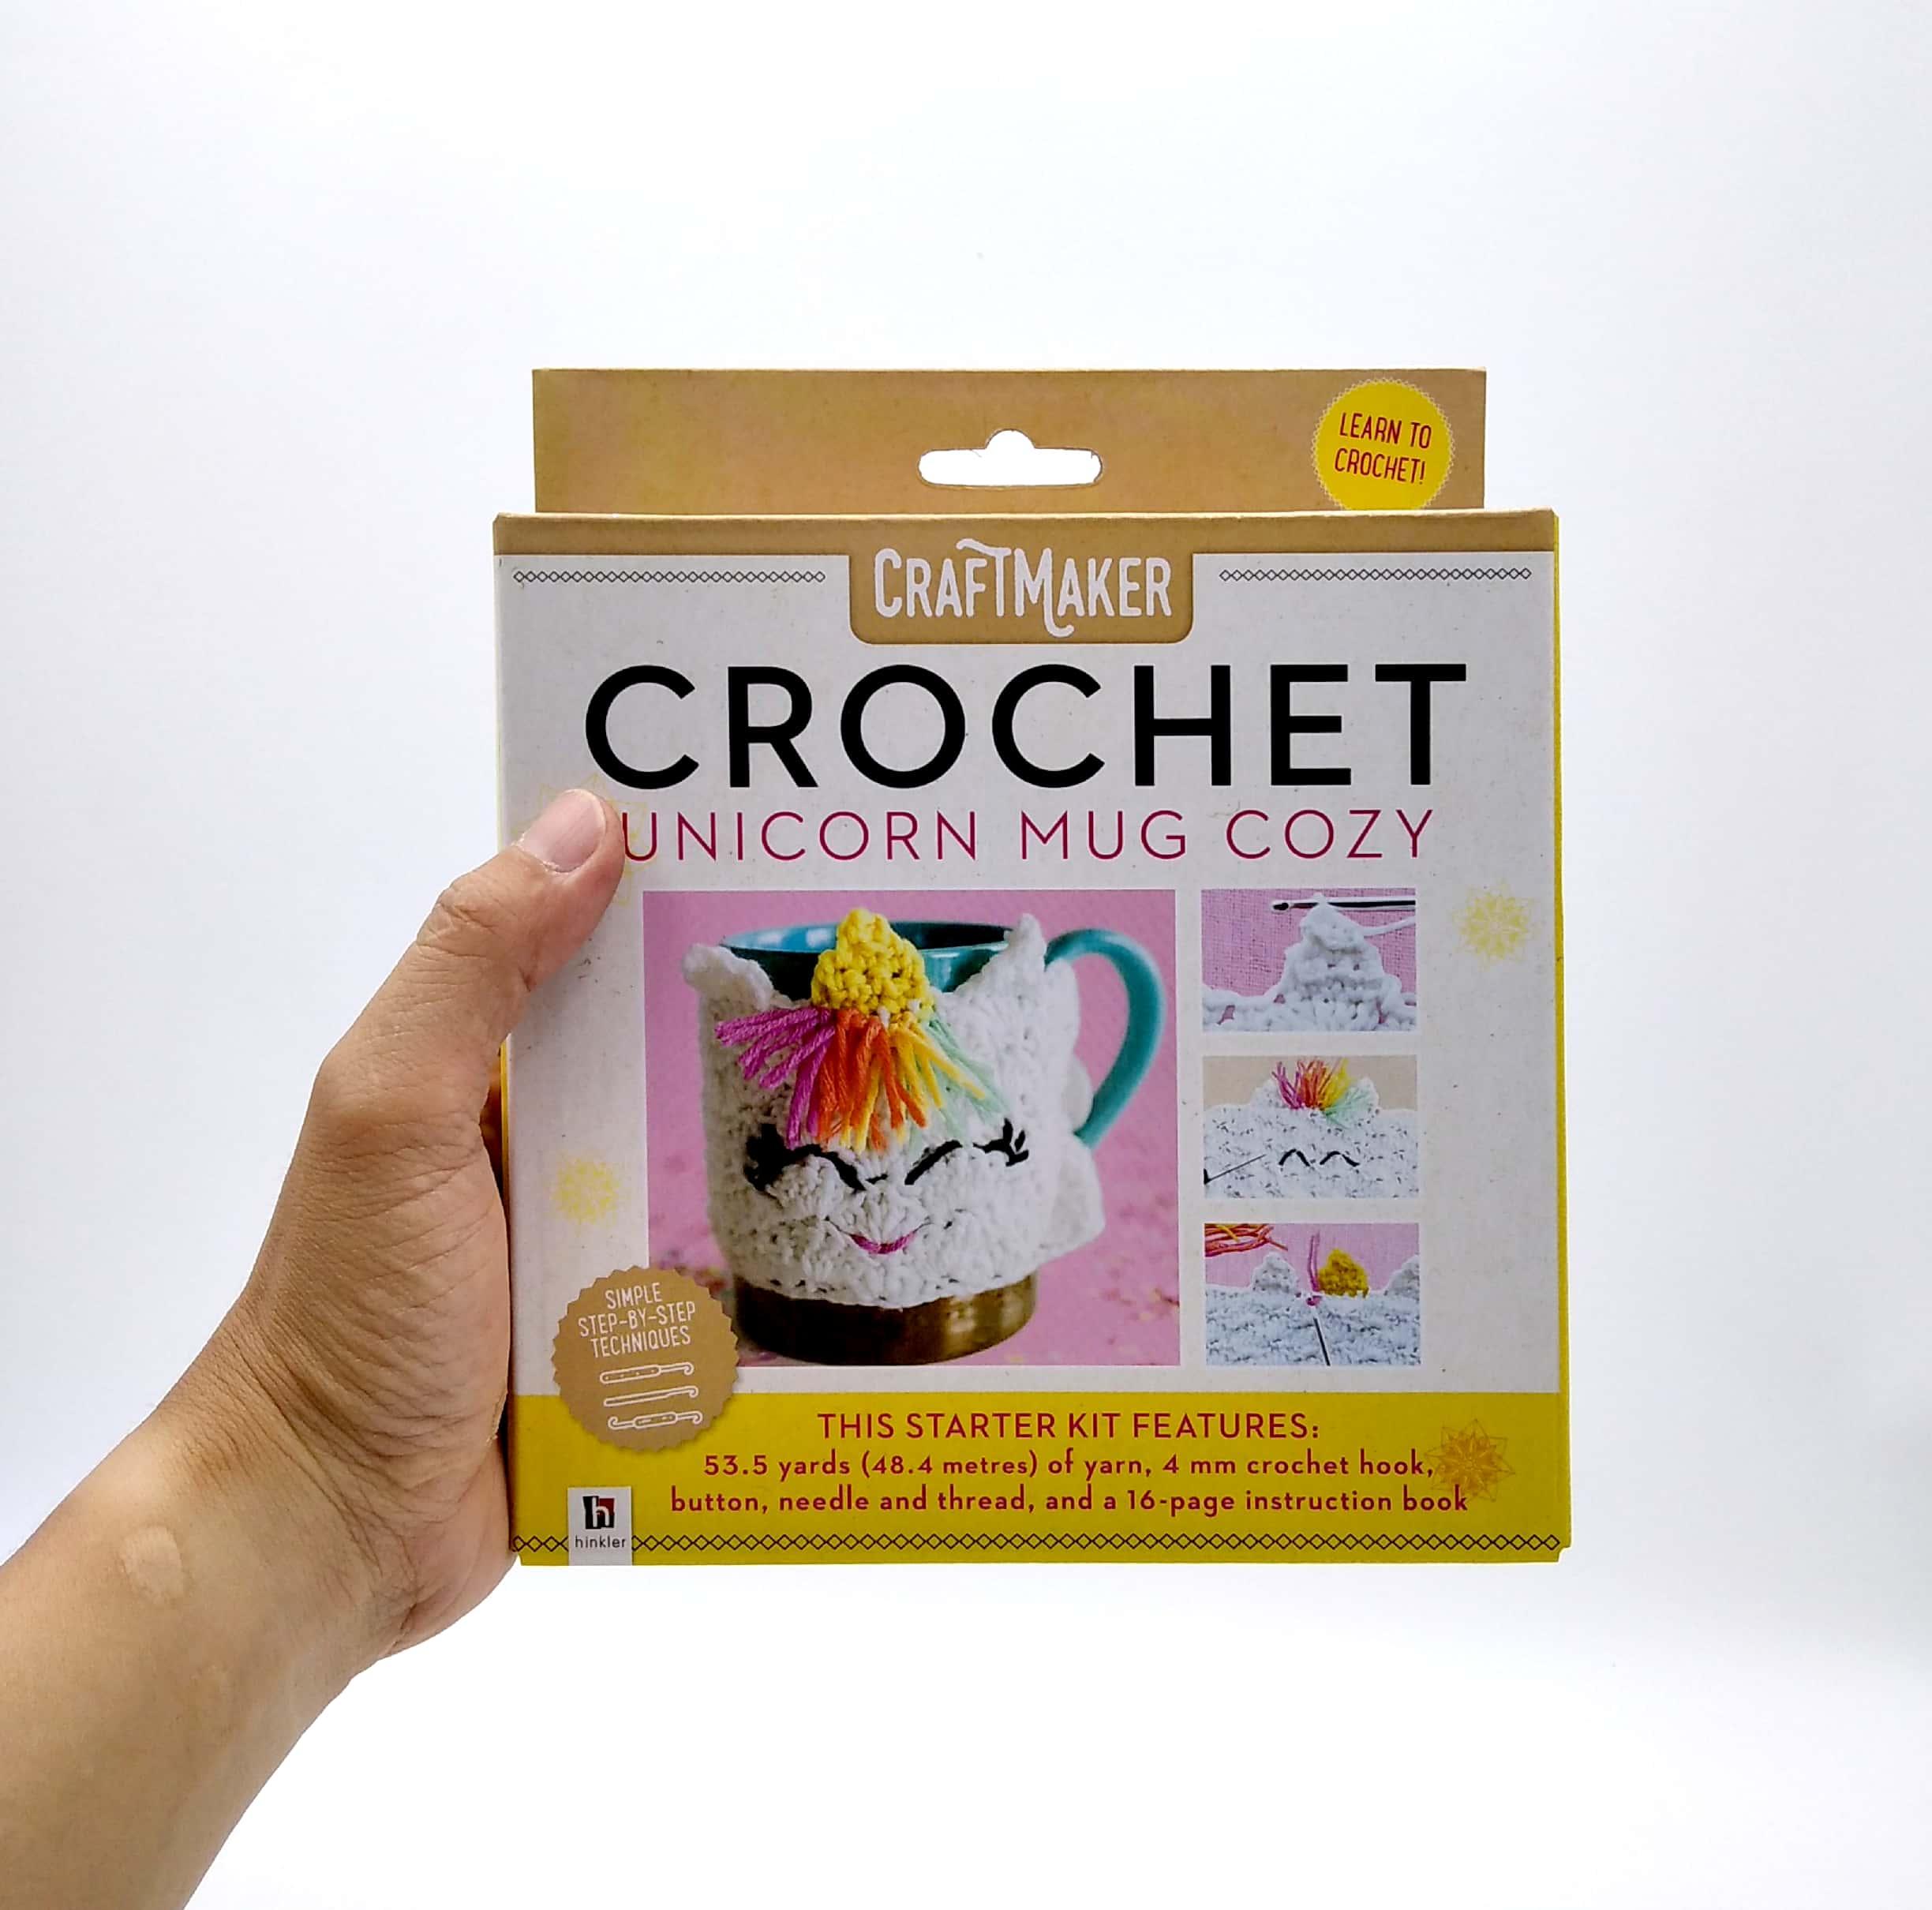 CraftMaker Crochet: Unicorn Mug Cozy